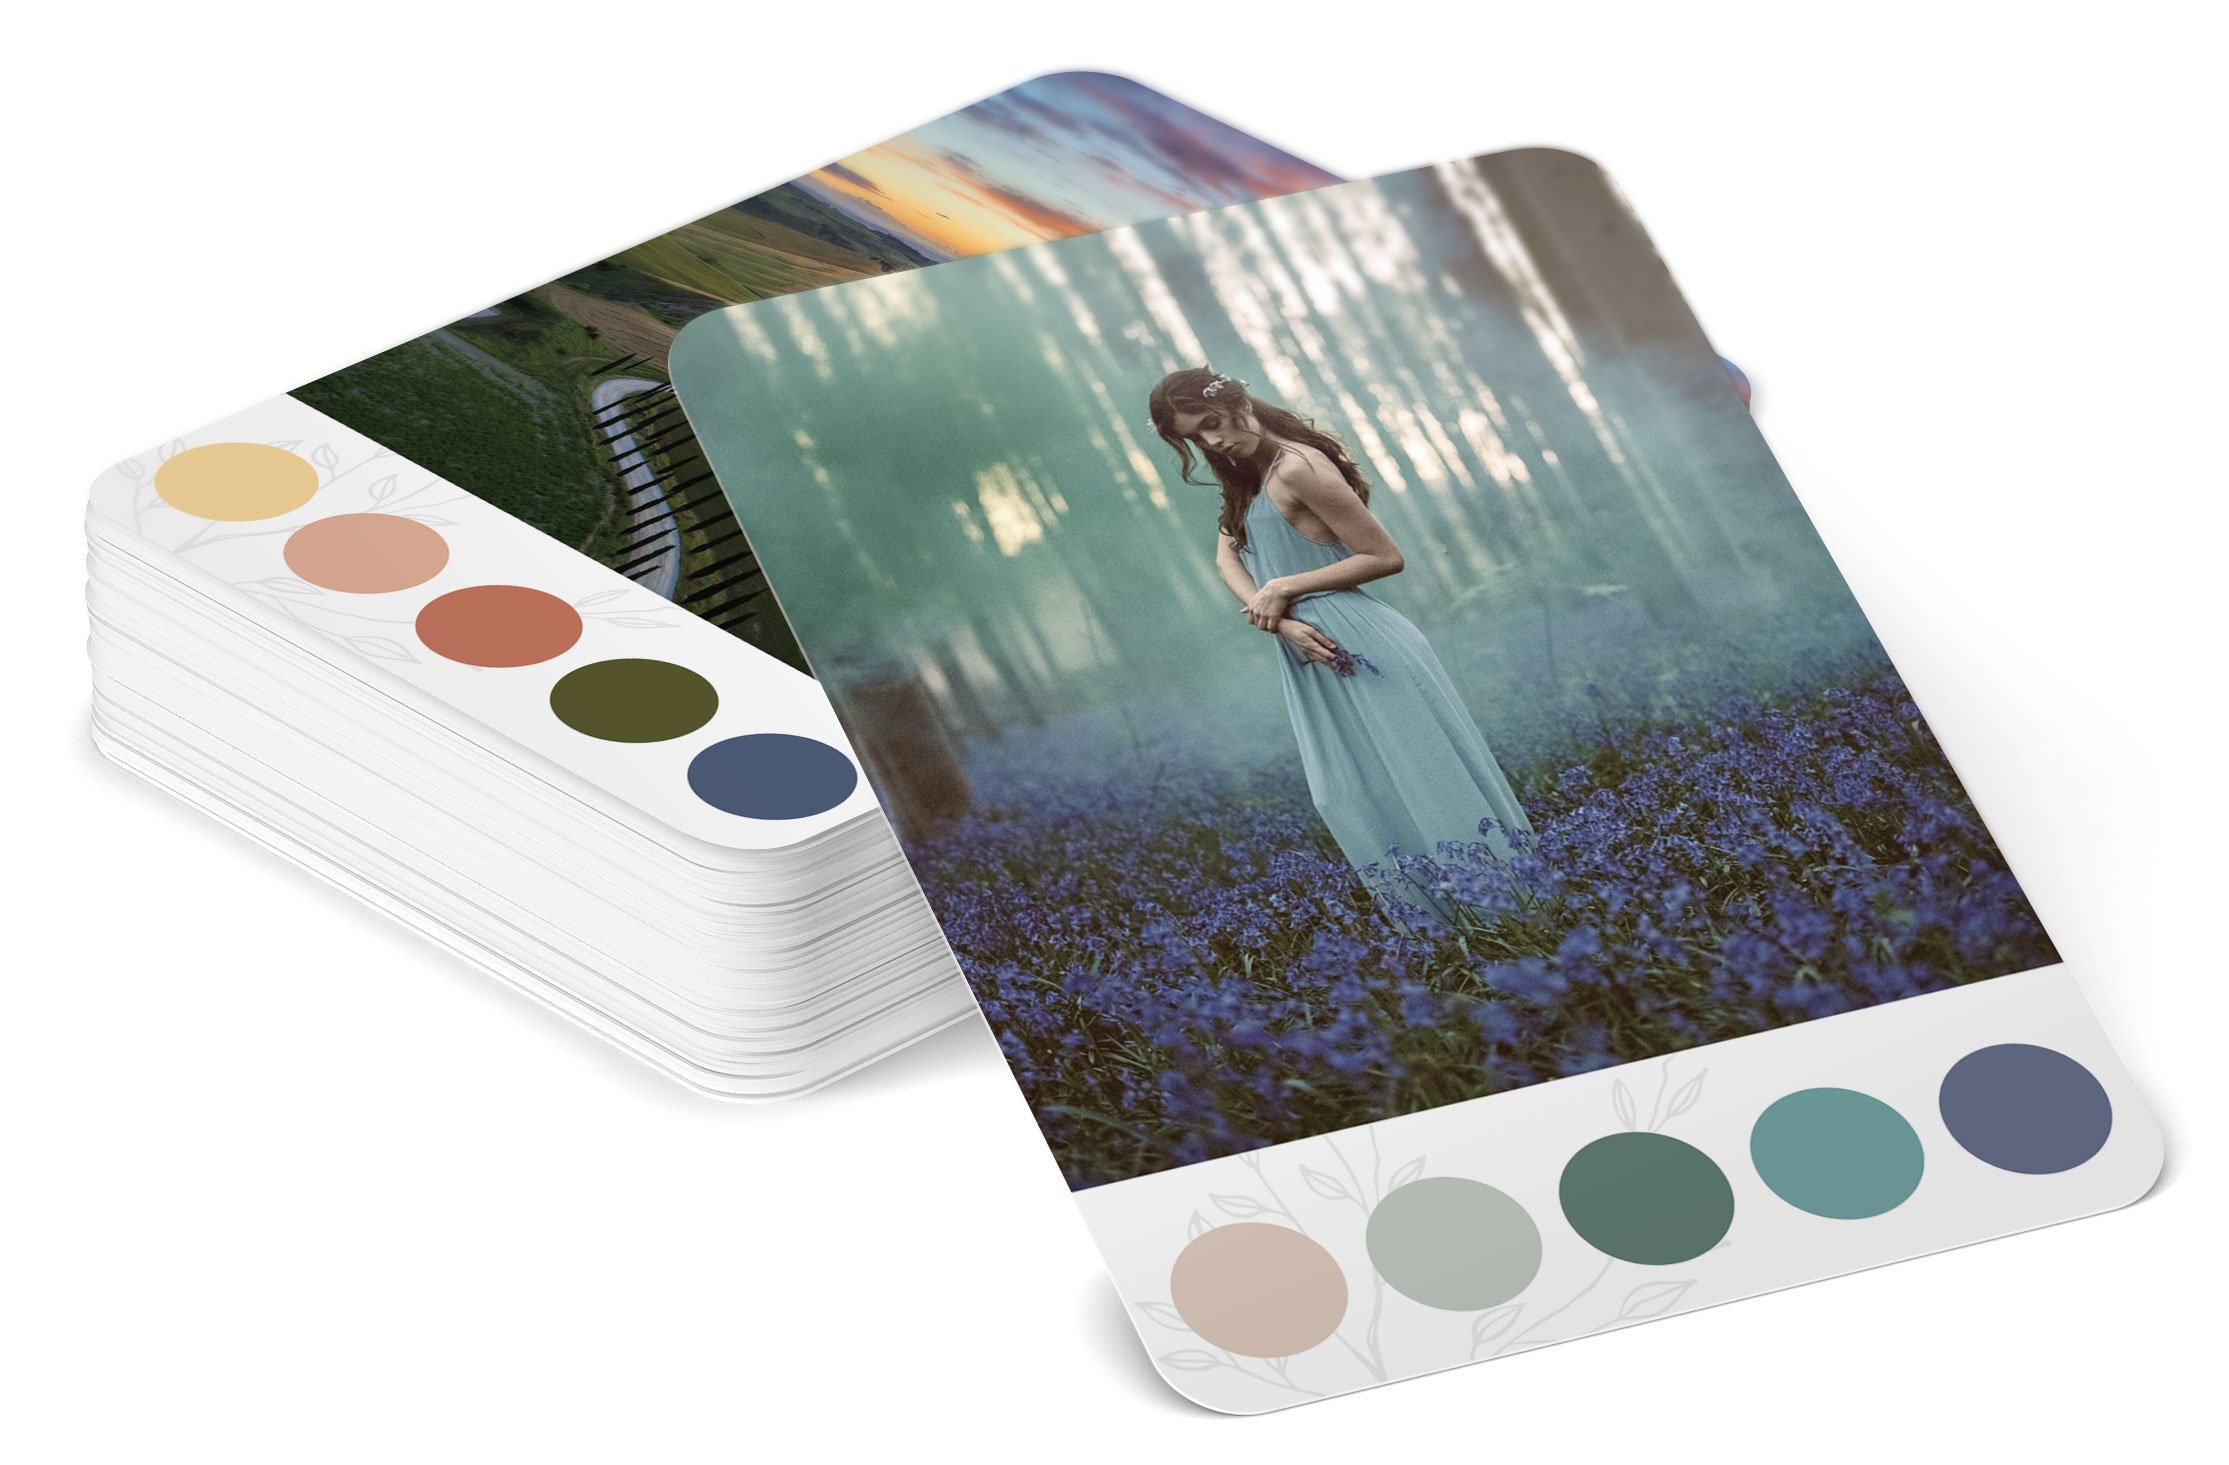 Colorflow - Creator Cards — Ivy Newport